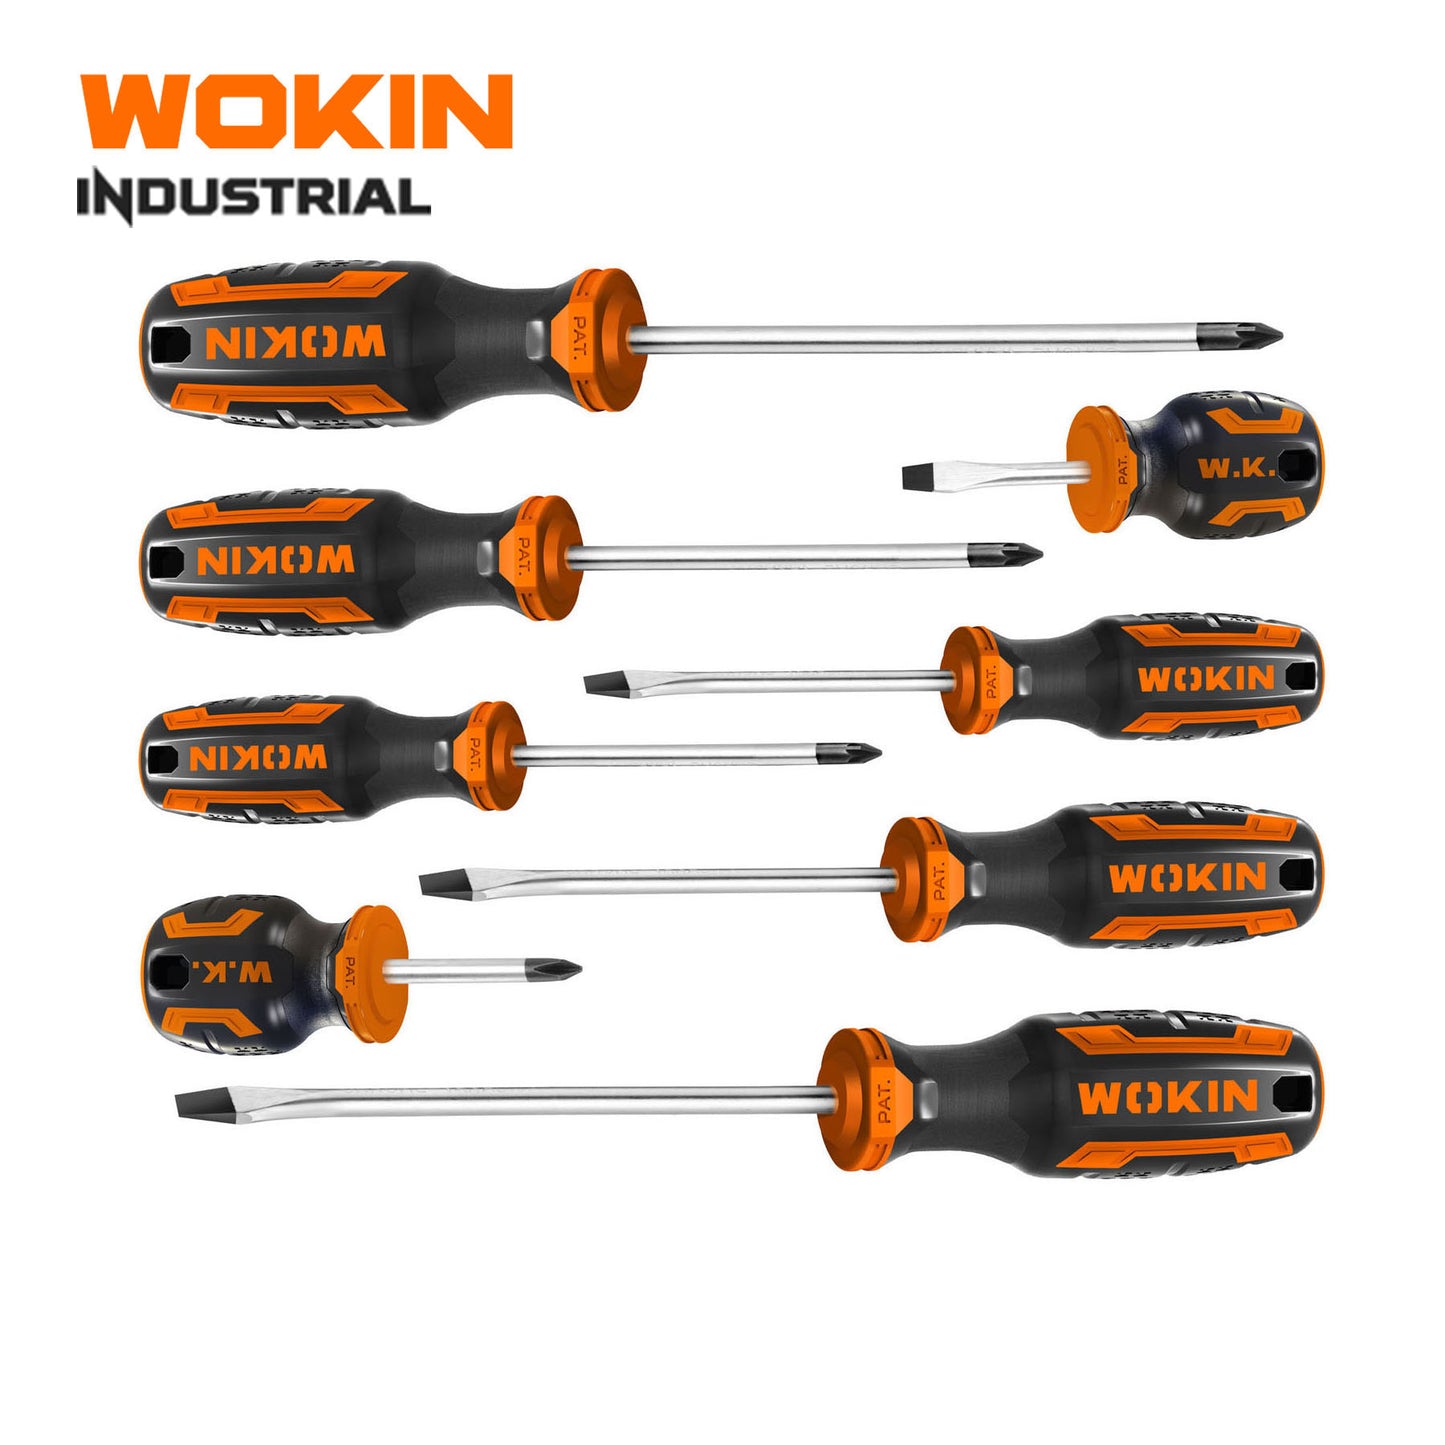 Wokin 8 Piece Industrial Screwdriver Set